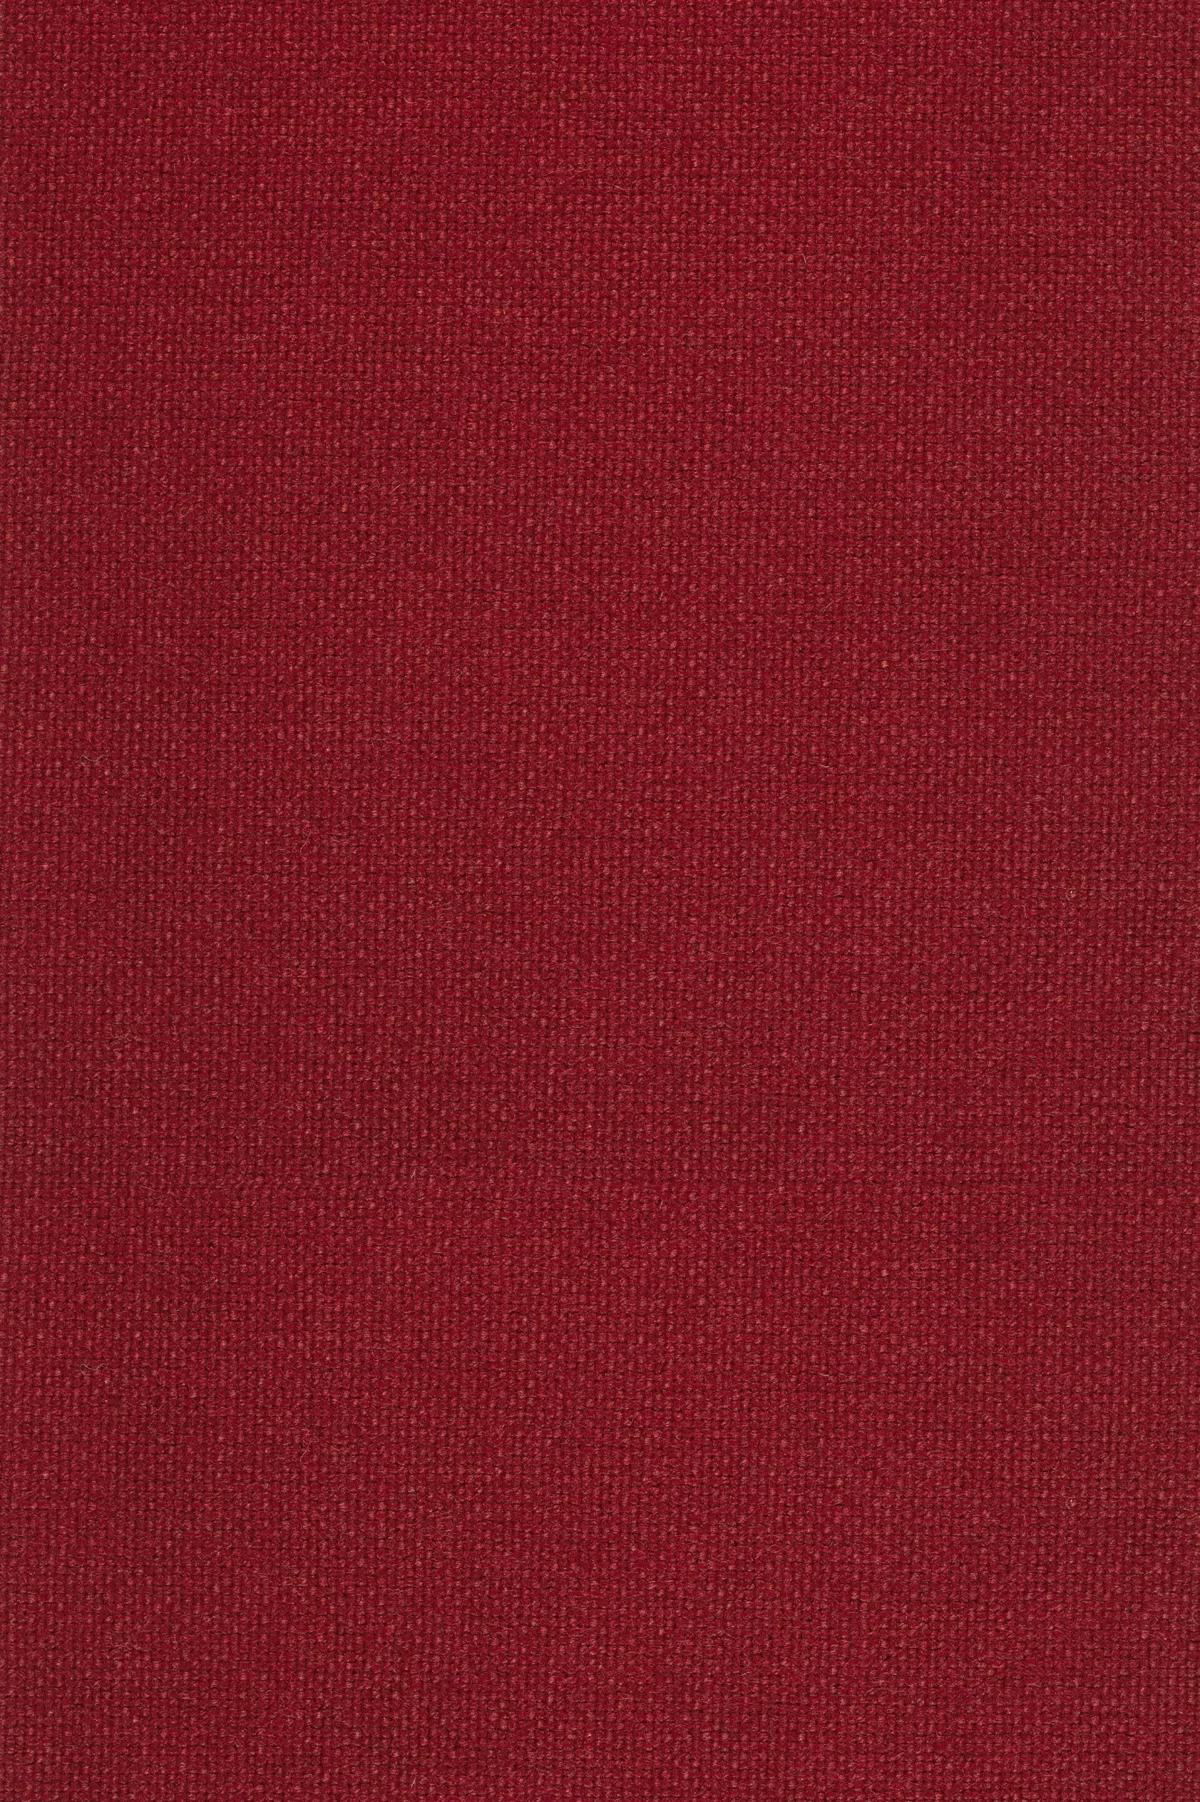 Fabric sample Hallingdal 65 657 red